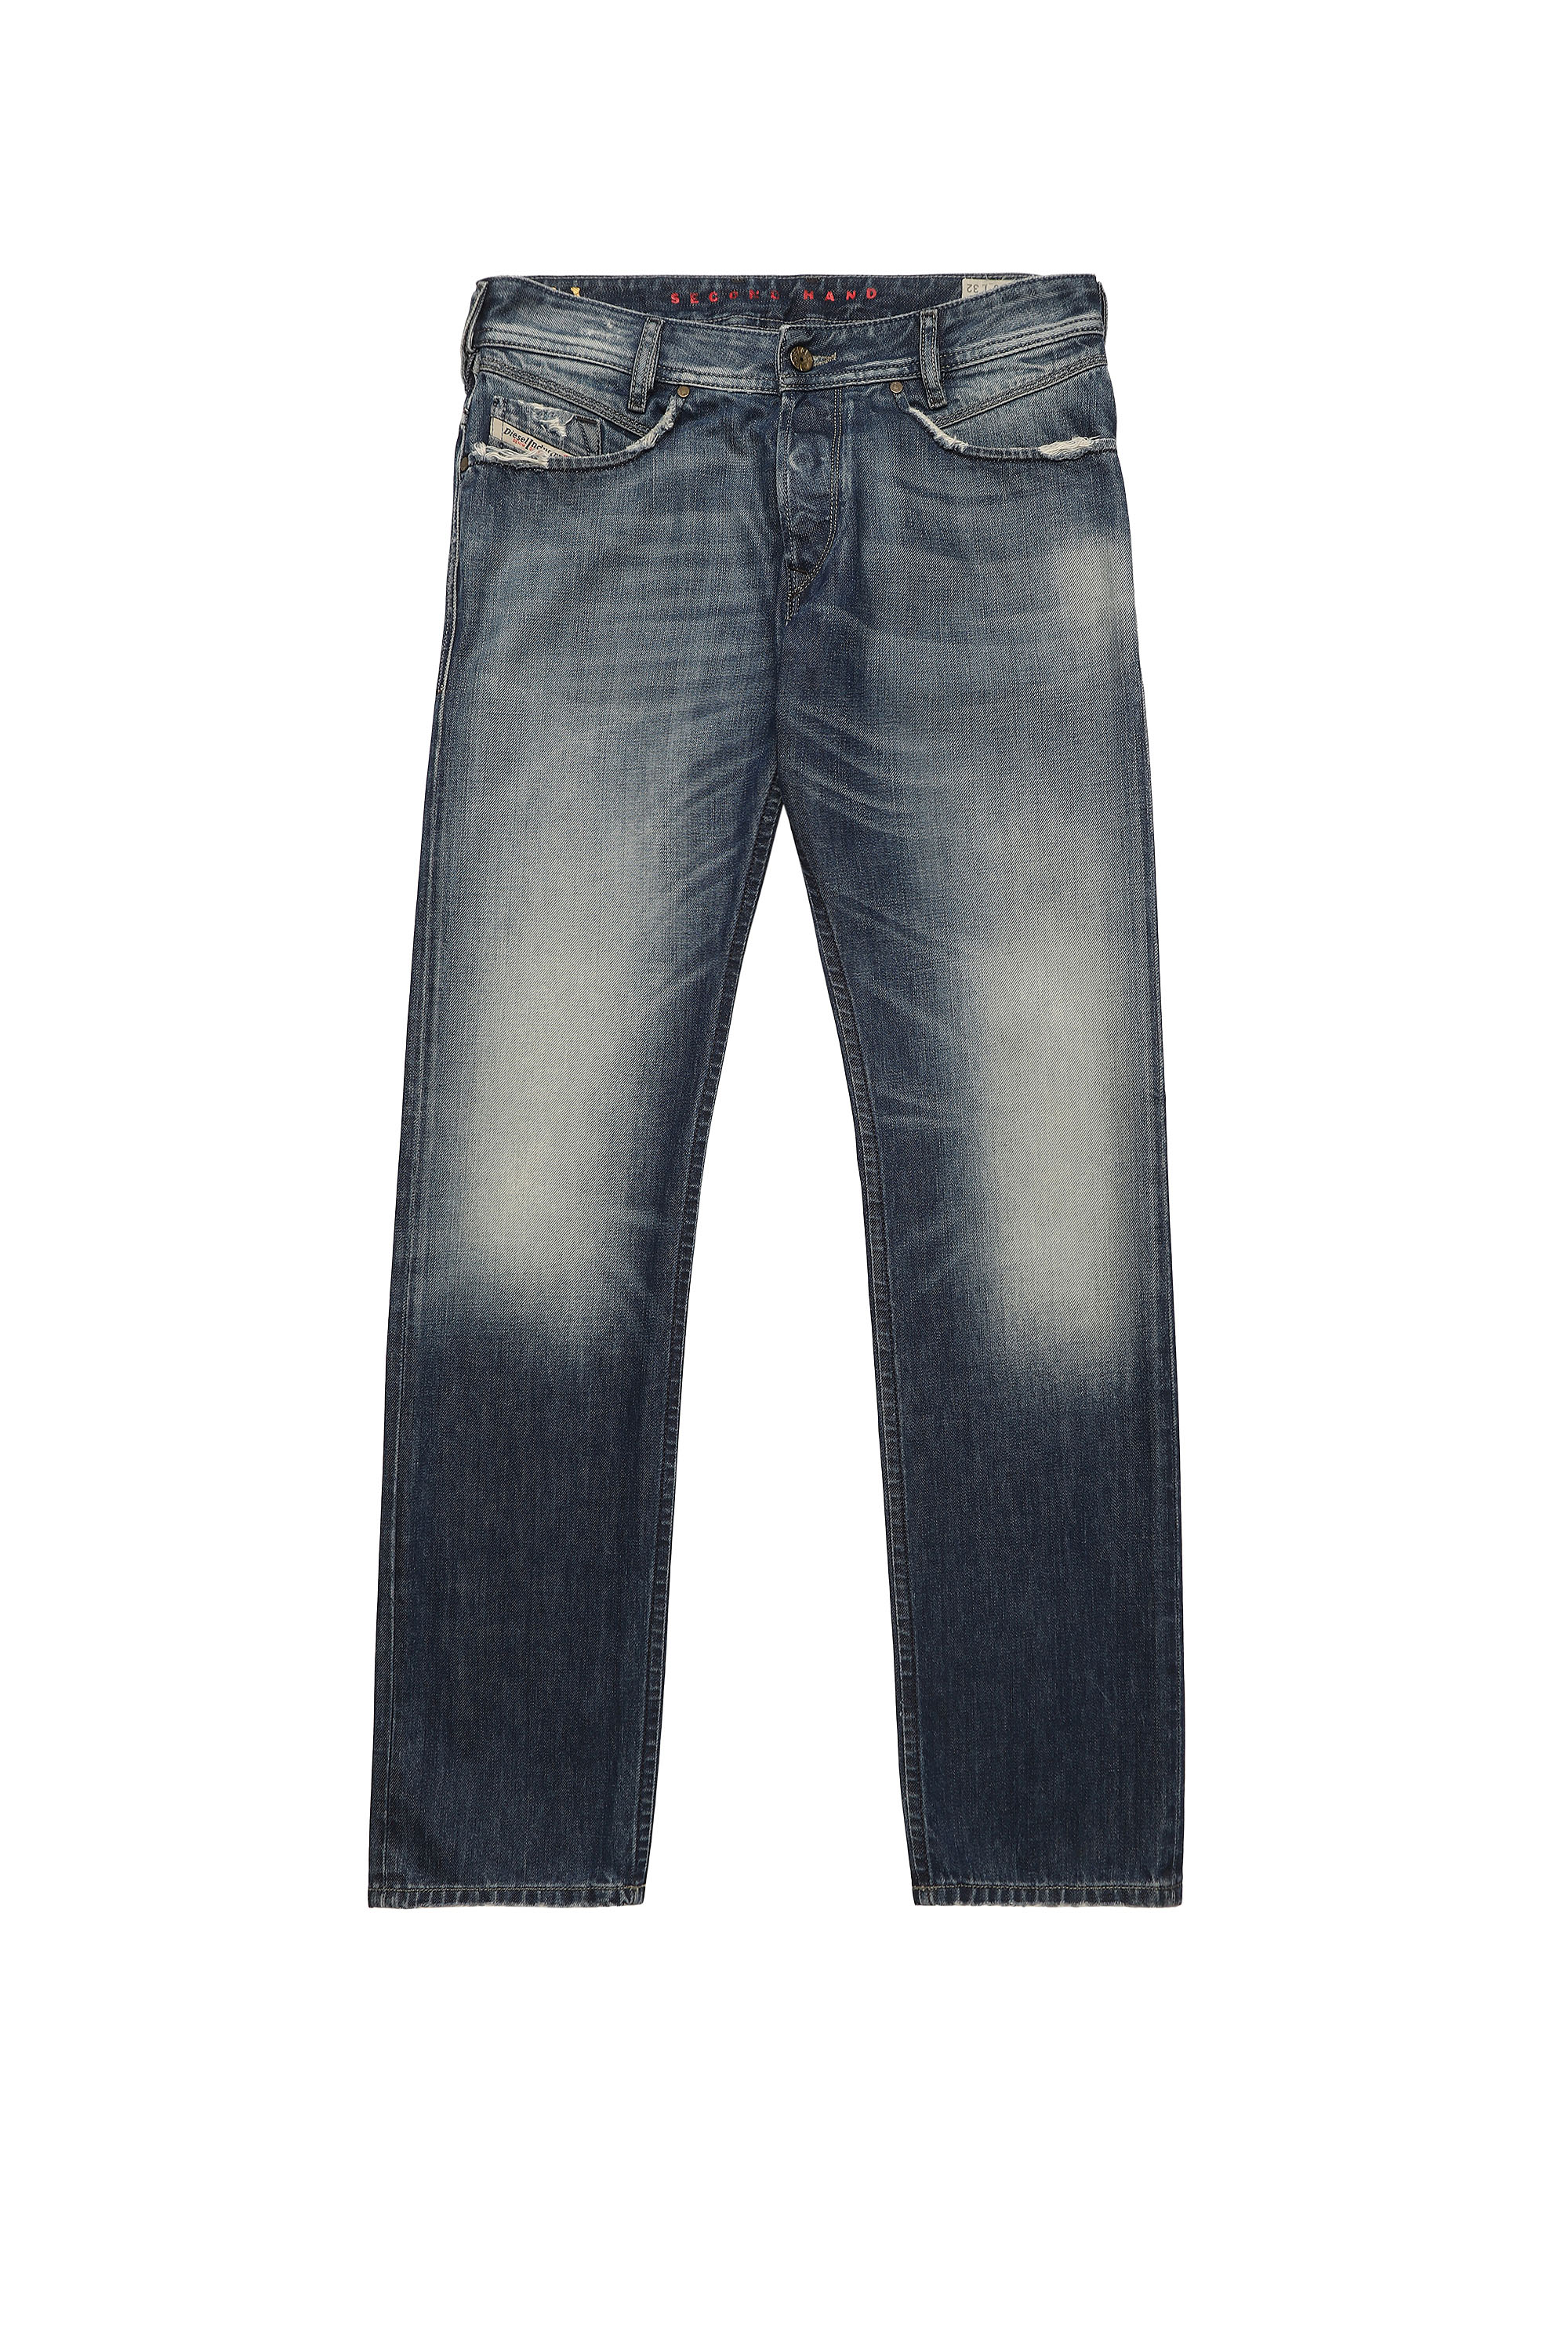 garen Banyan maandelijks POIAK Man - Jeans Medium blue | Diesel Second Hand